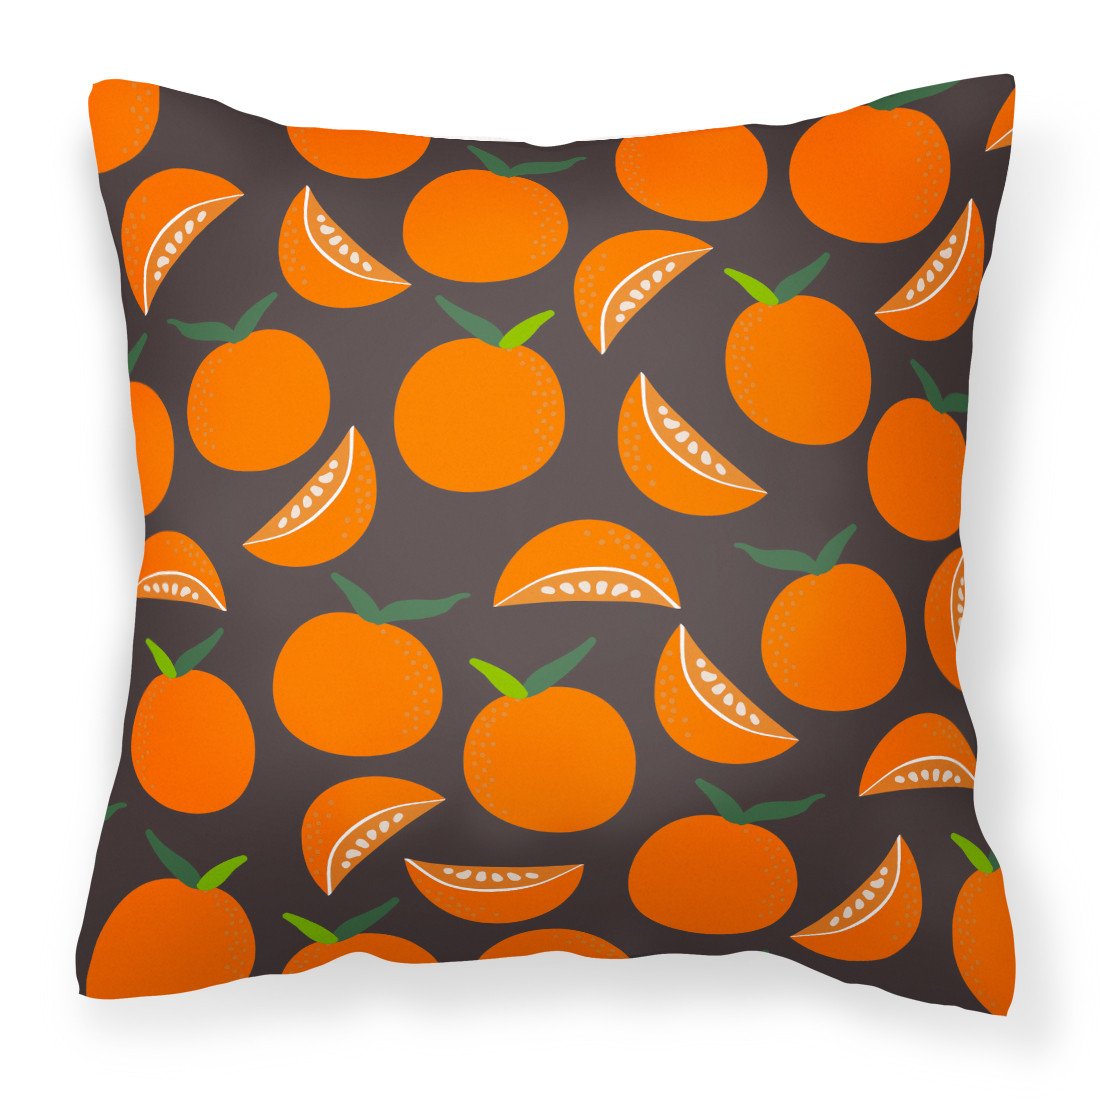 Oranges on Gray Fabric Decorative Pillow BB5142PW1818 by Caroline's Treasures